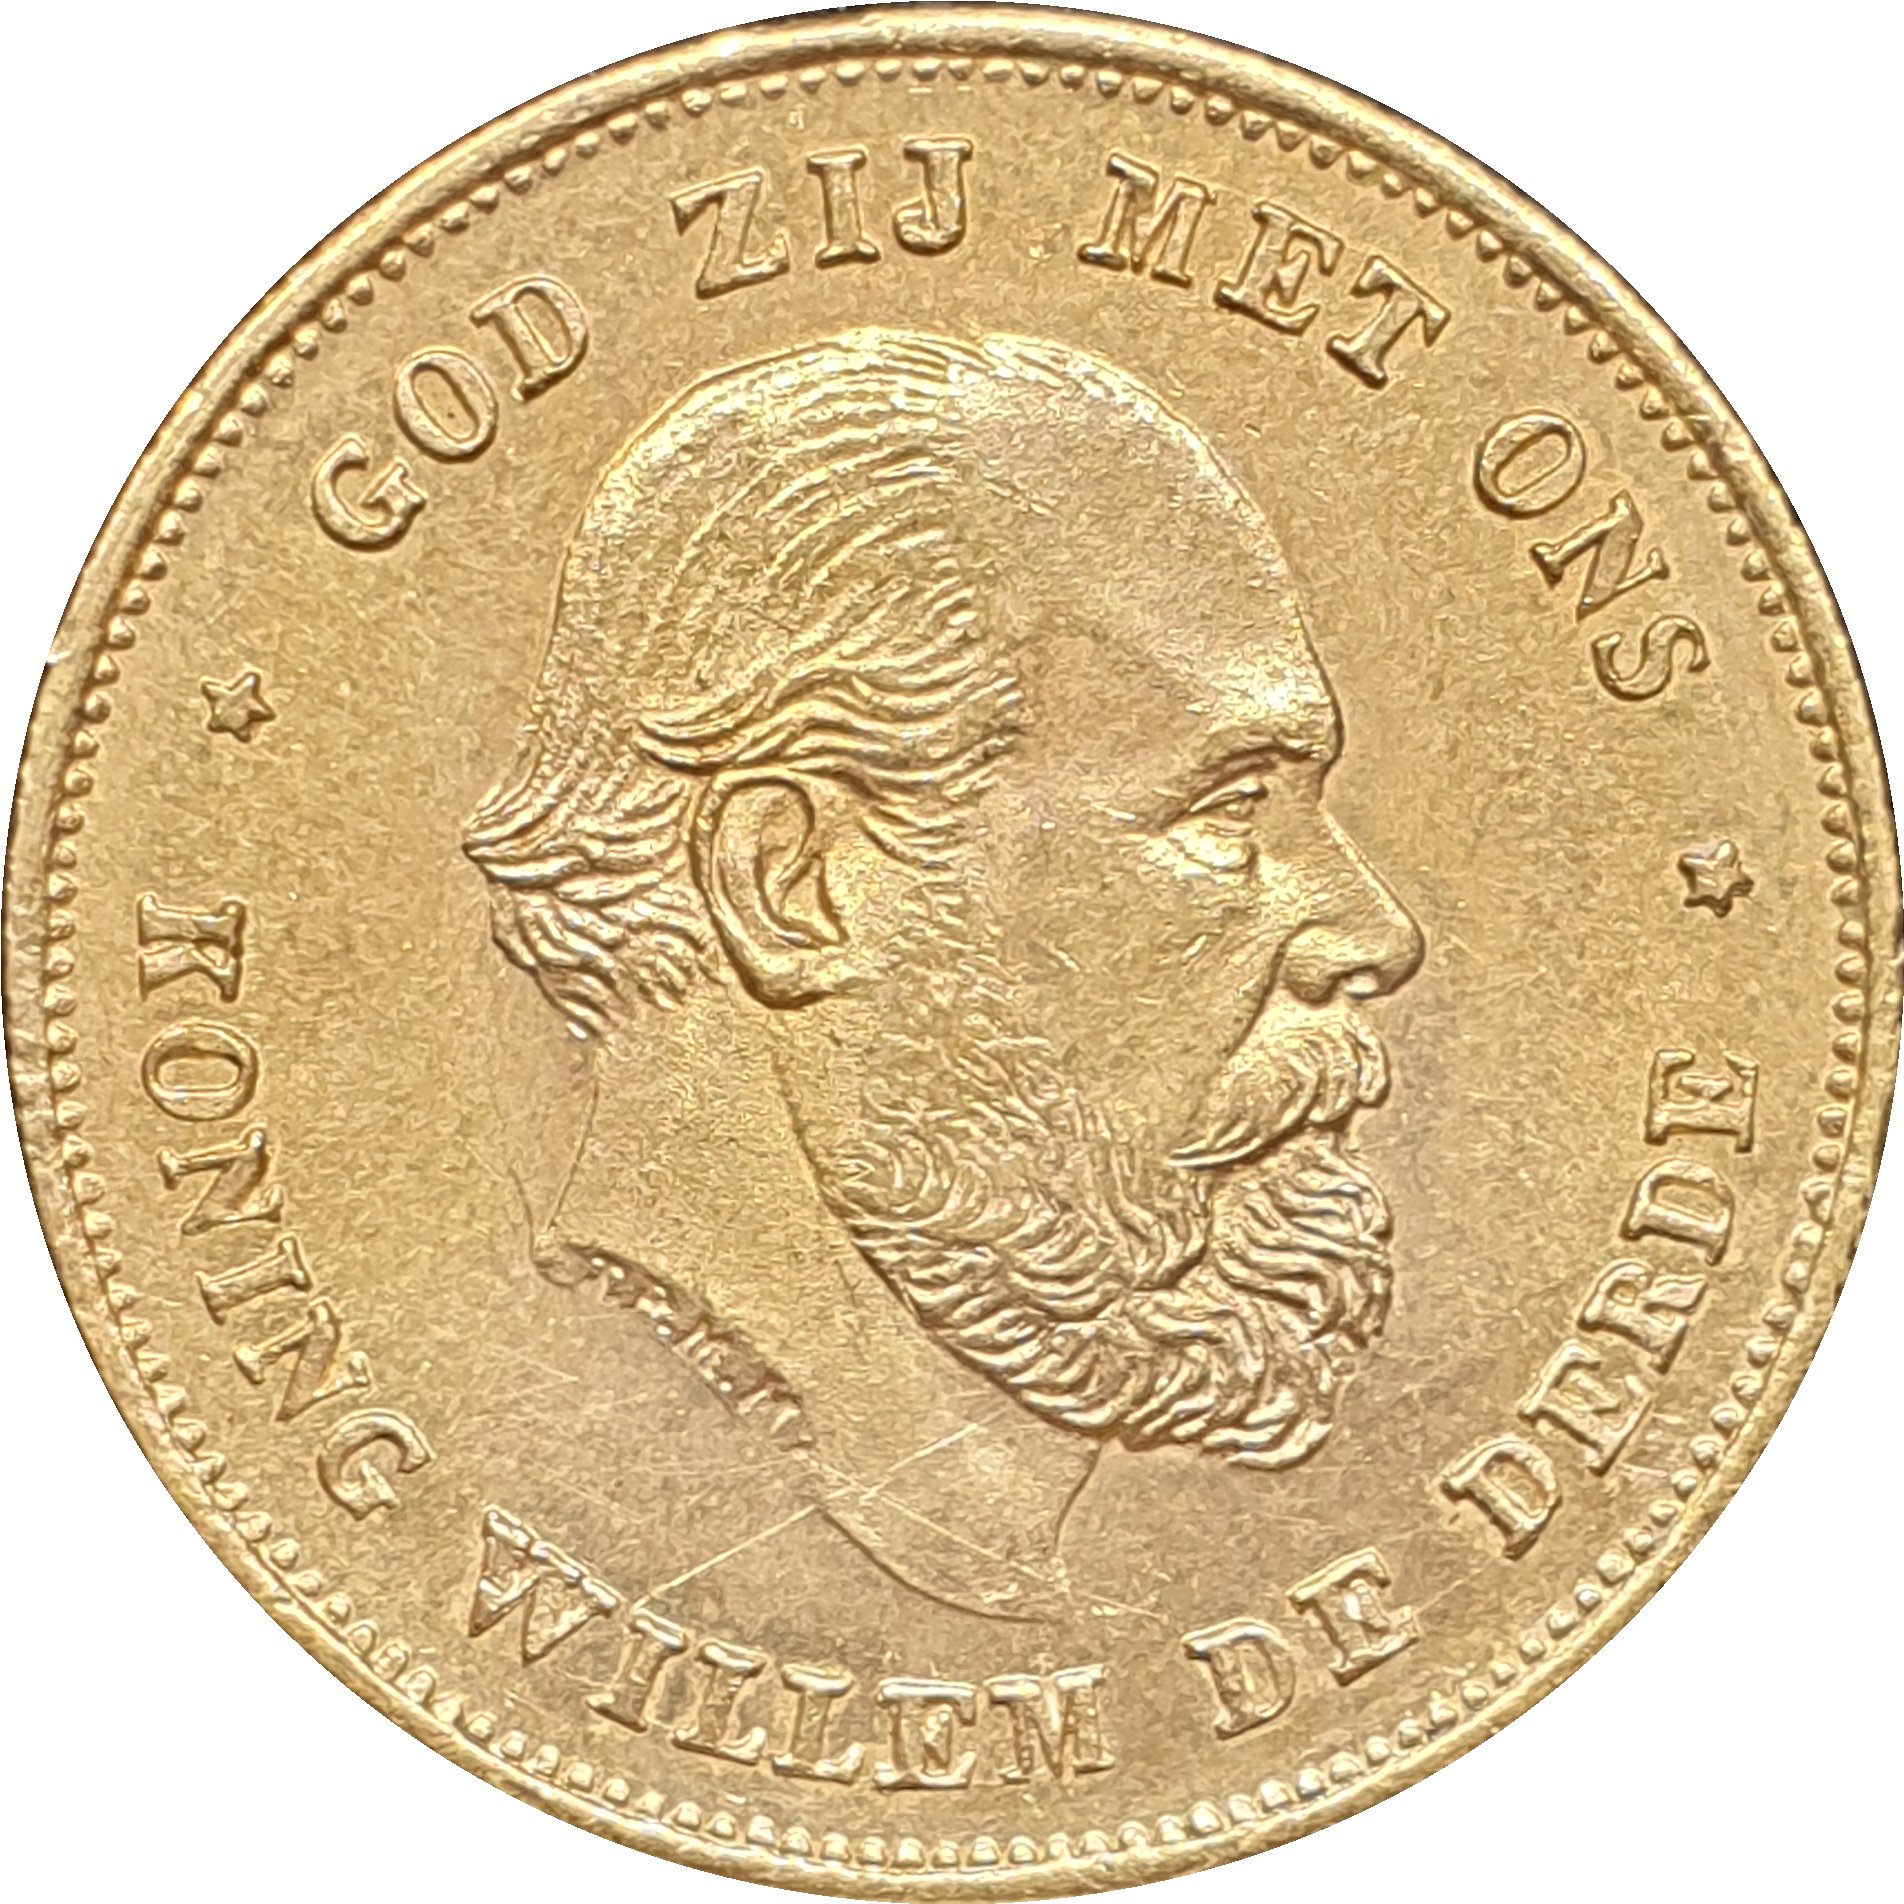 Netherlands - 10 Gulden - 1875 - Willem III